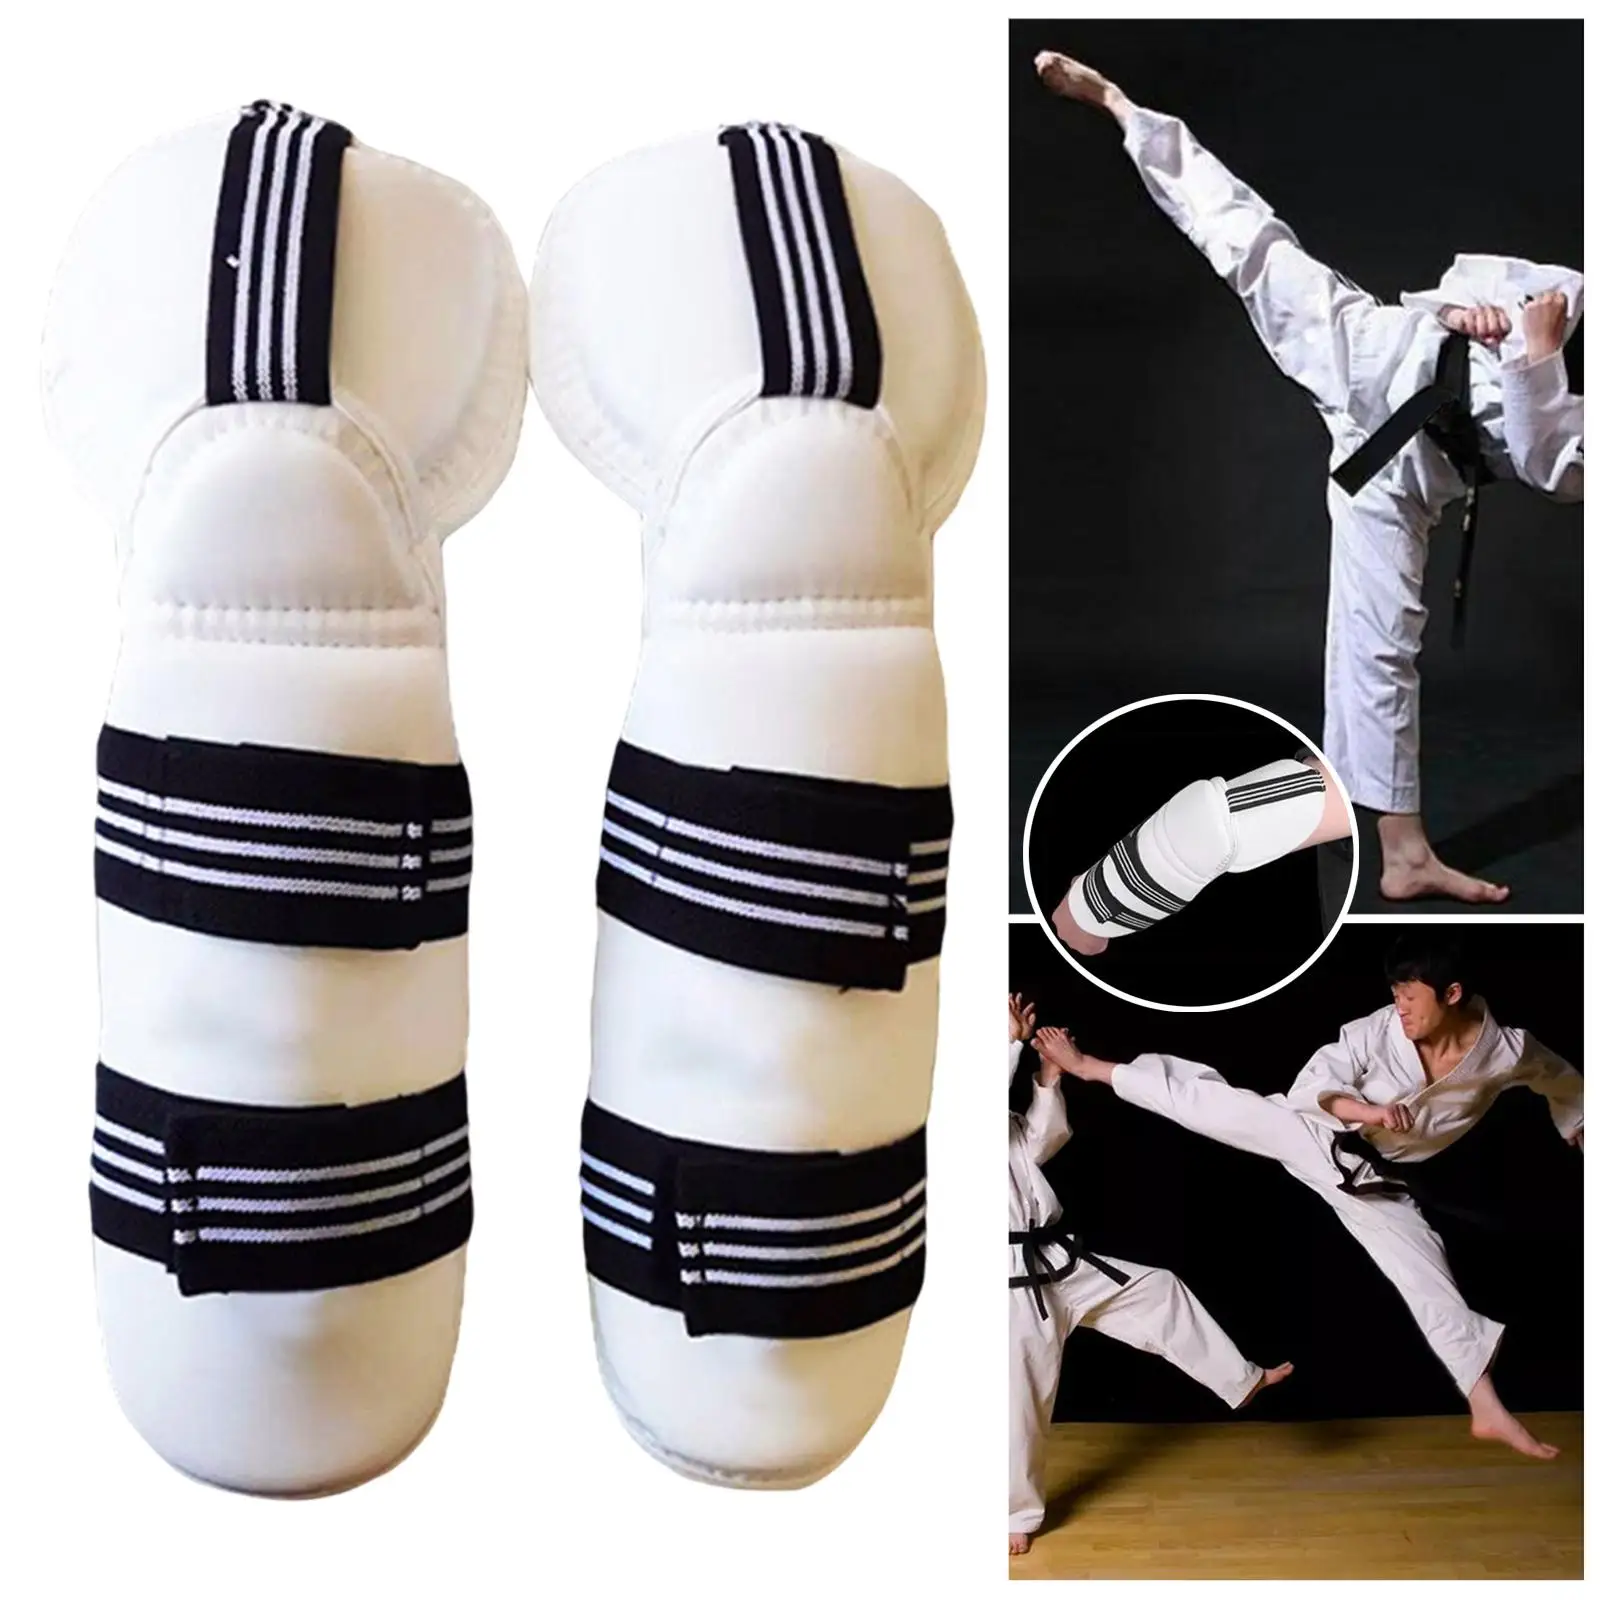 Taekwondo Guard Thickened Lightweight Protection for Training Match Karate